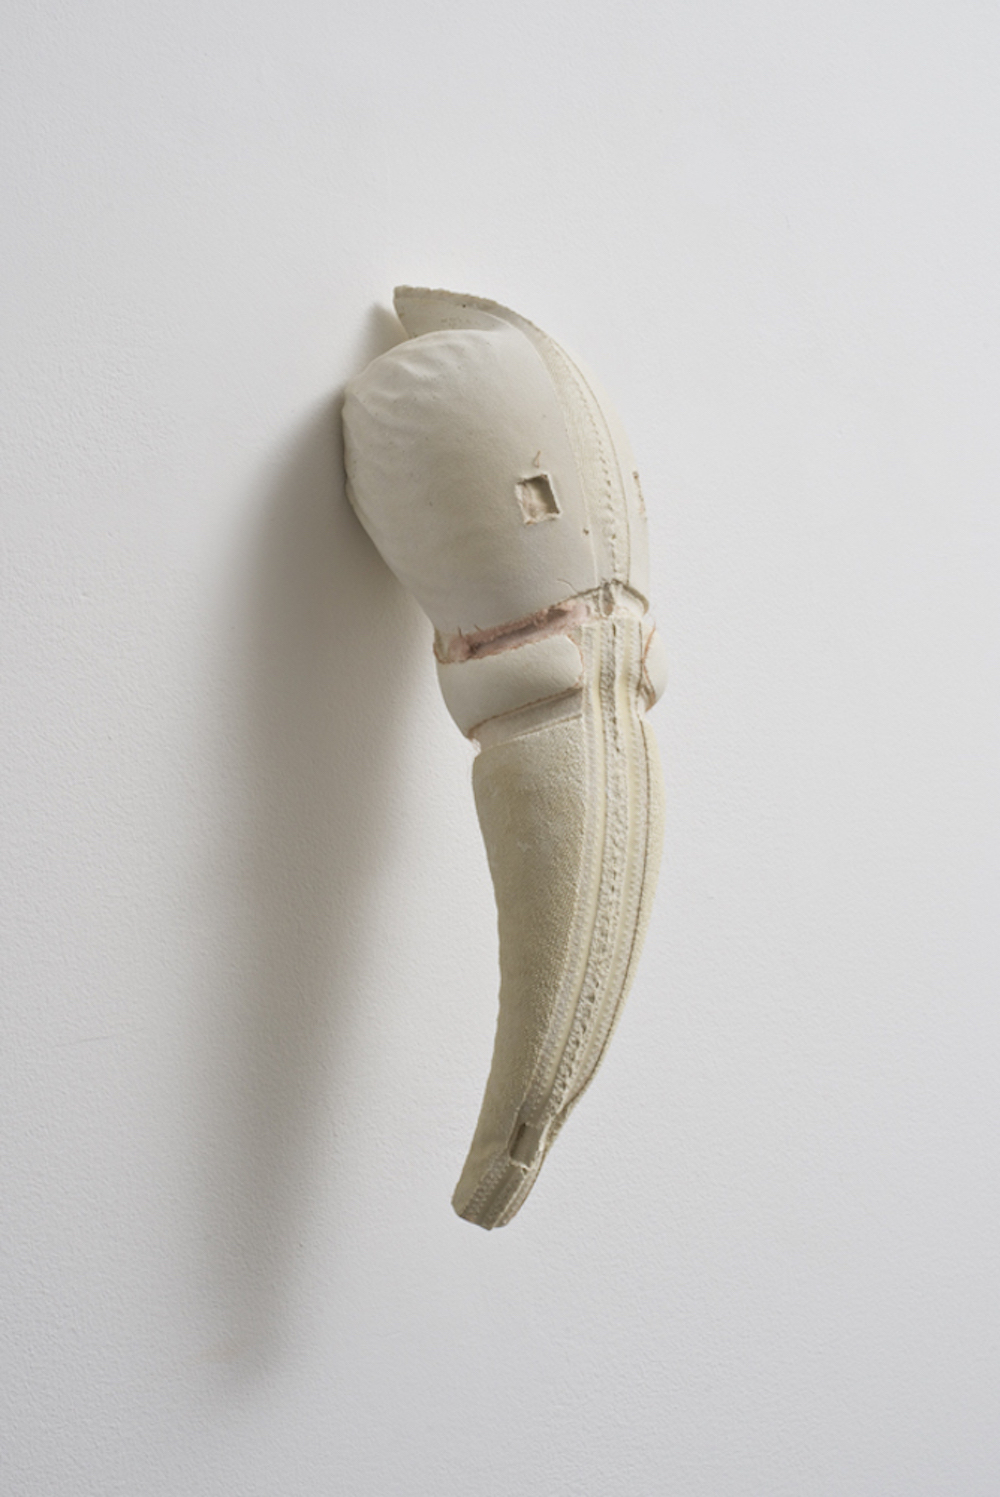 10 Untitled (STB), 2011, plaster 28 x 13 x 11 cm (cast of inside of a bra, one from series) photo Michael Brzezinski